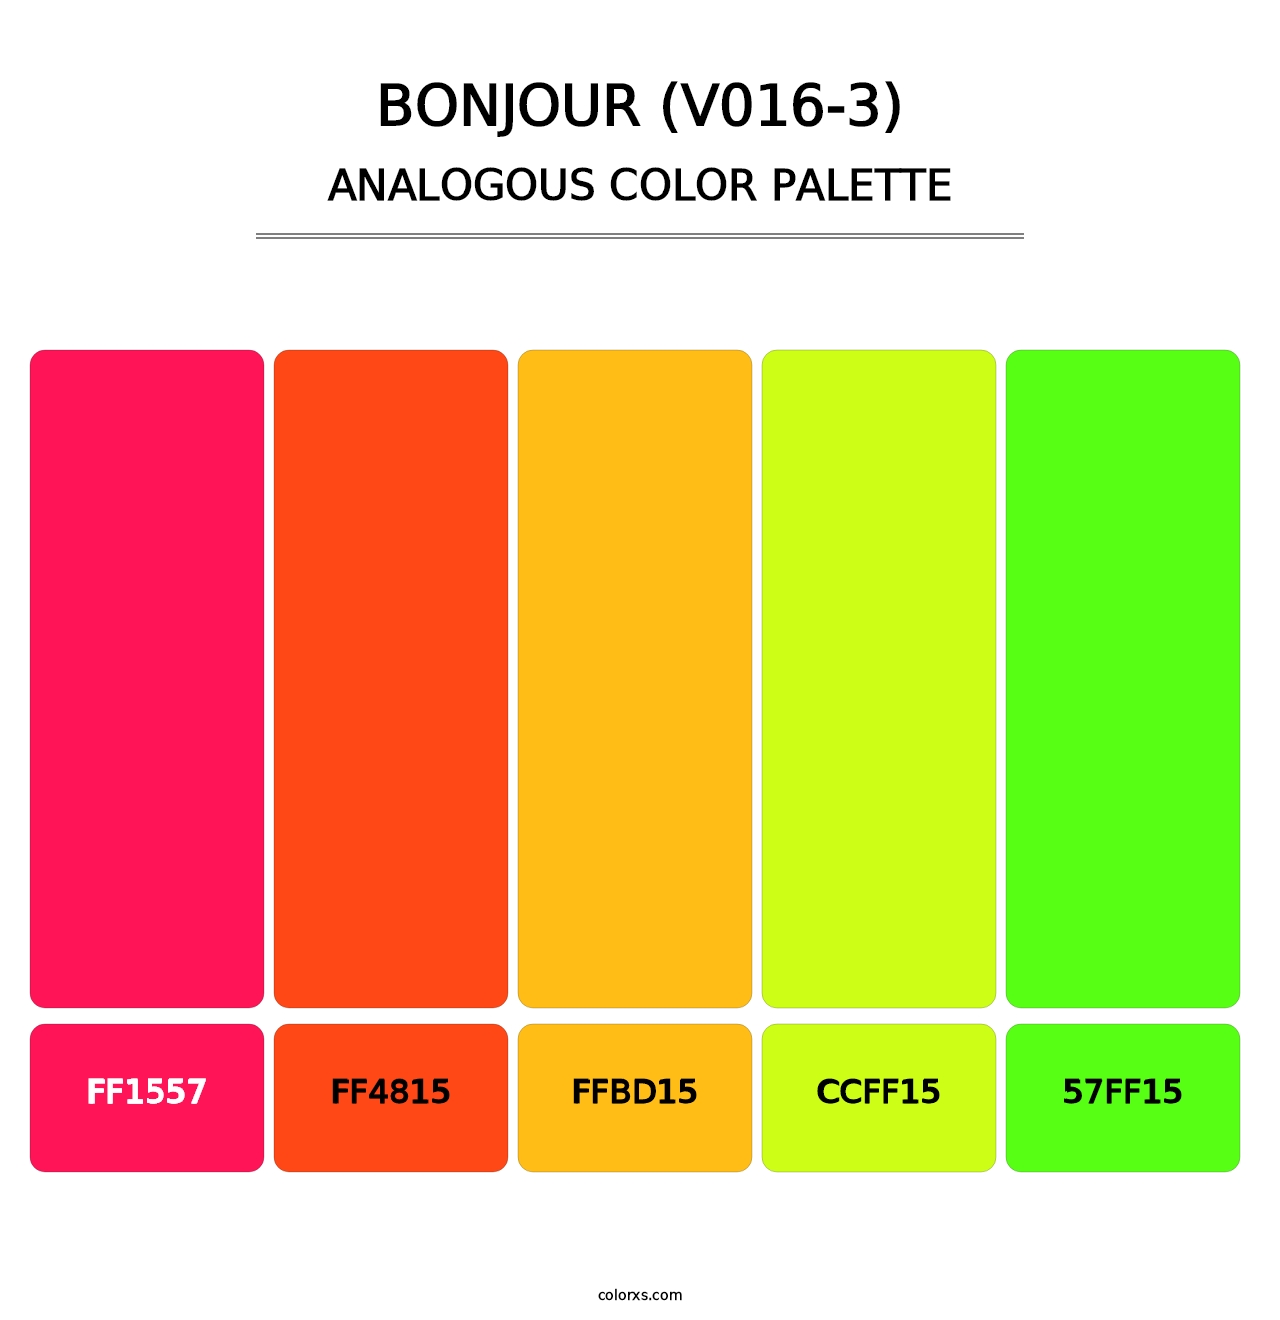 Bonjour (V016-3) - Analogous Color Palette